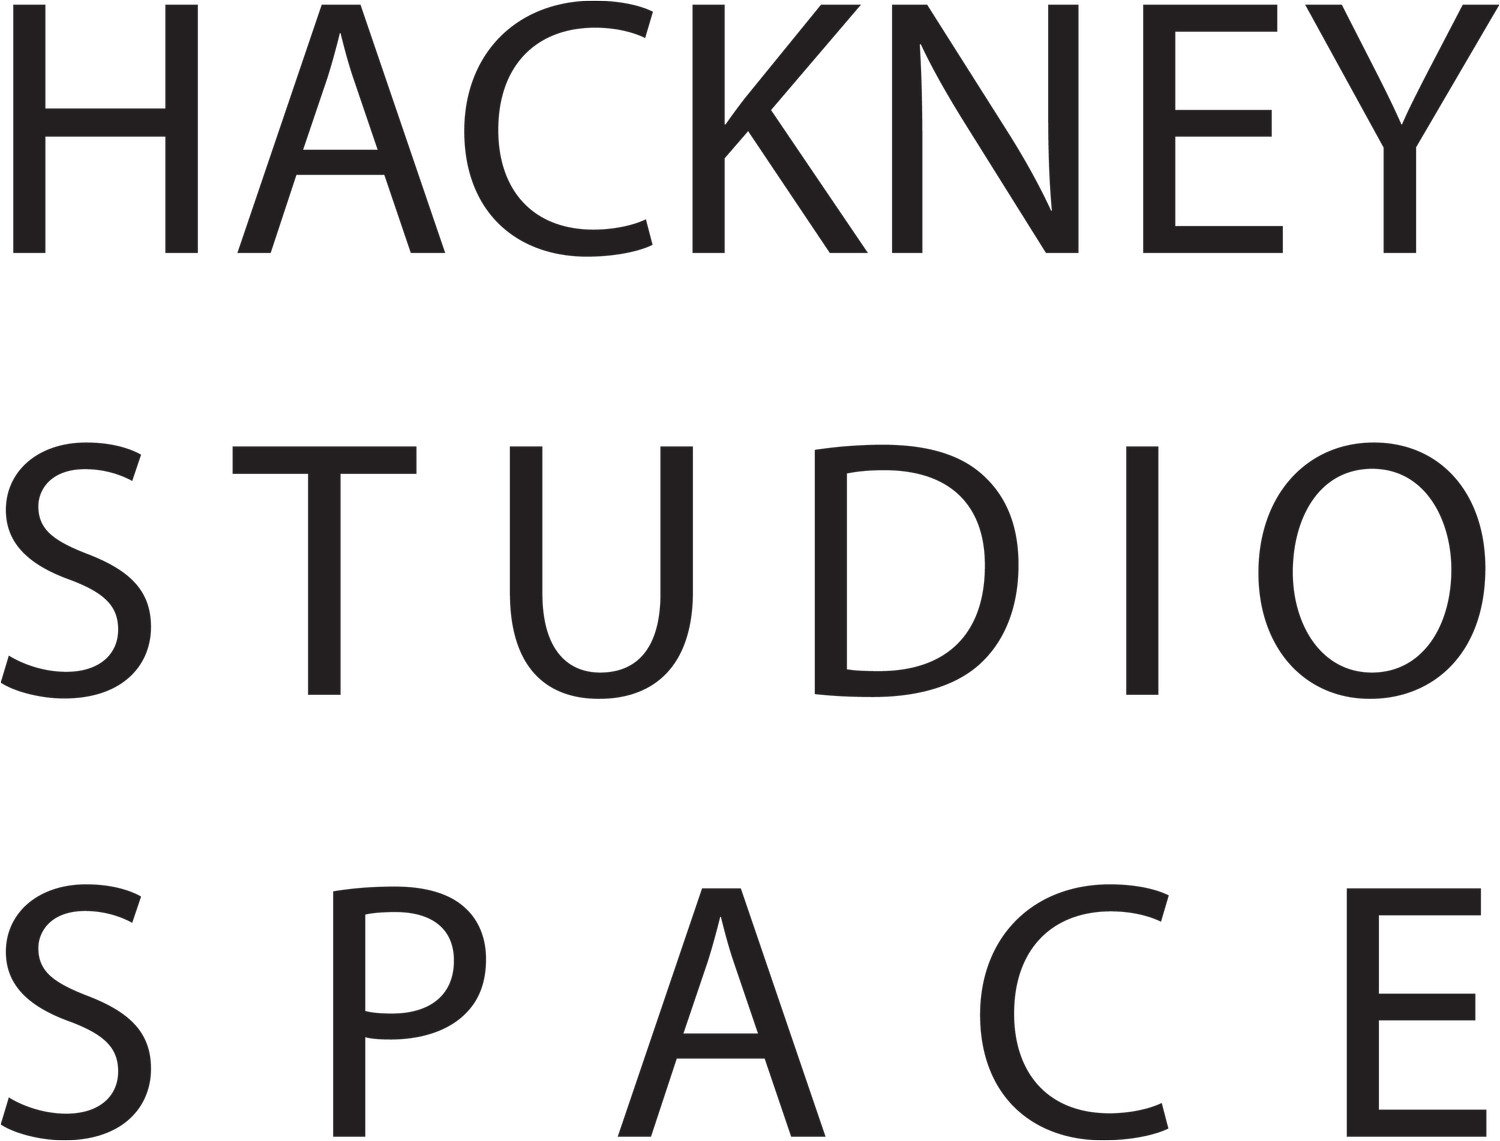 Hackney Studio Space